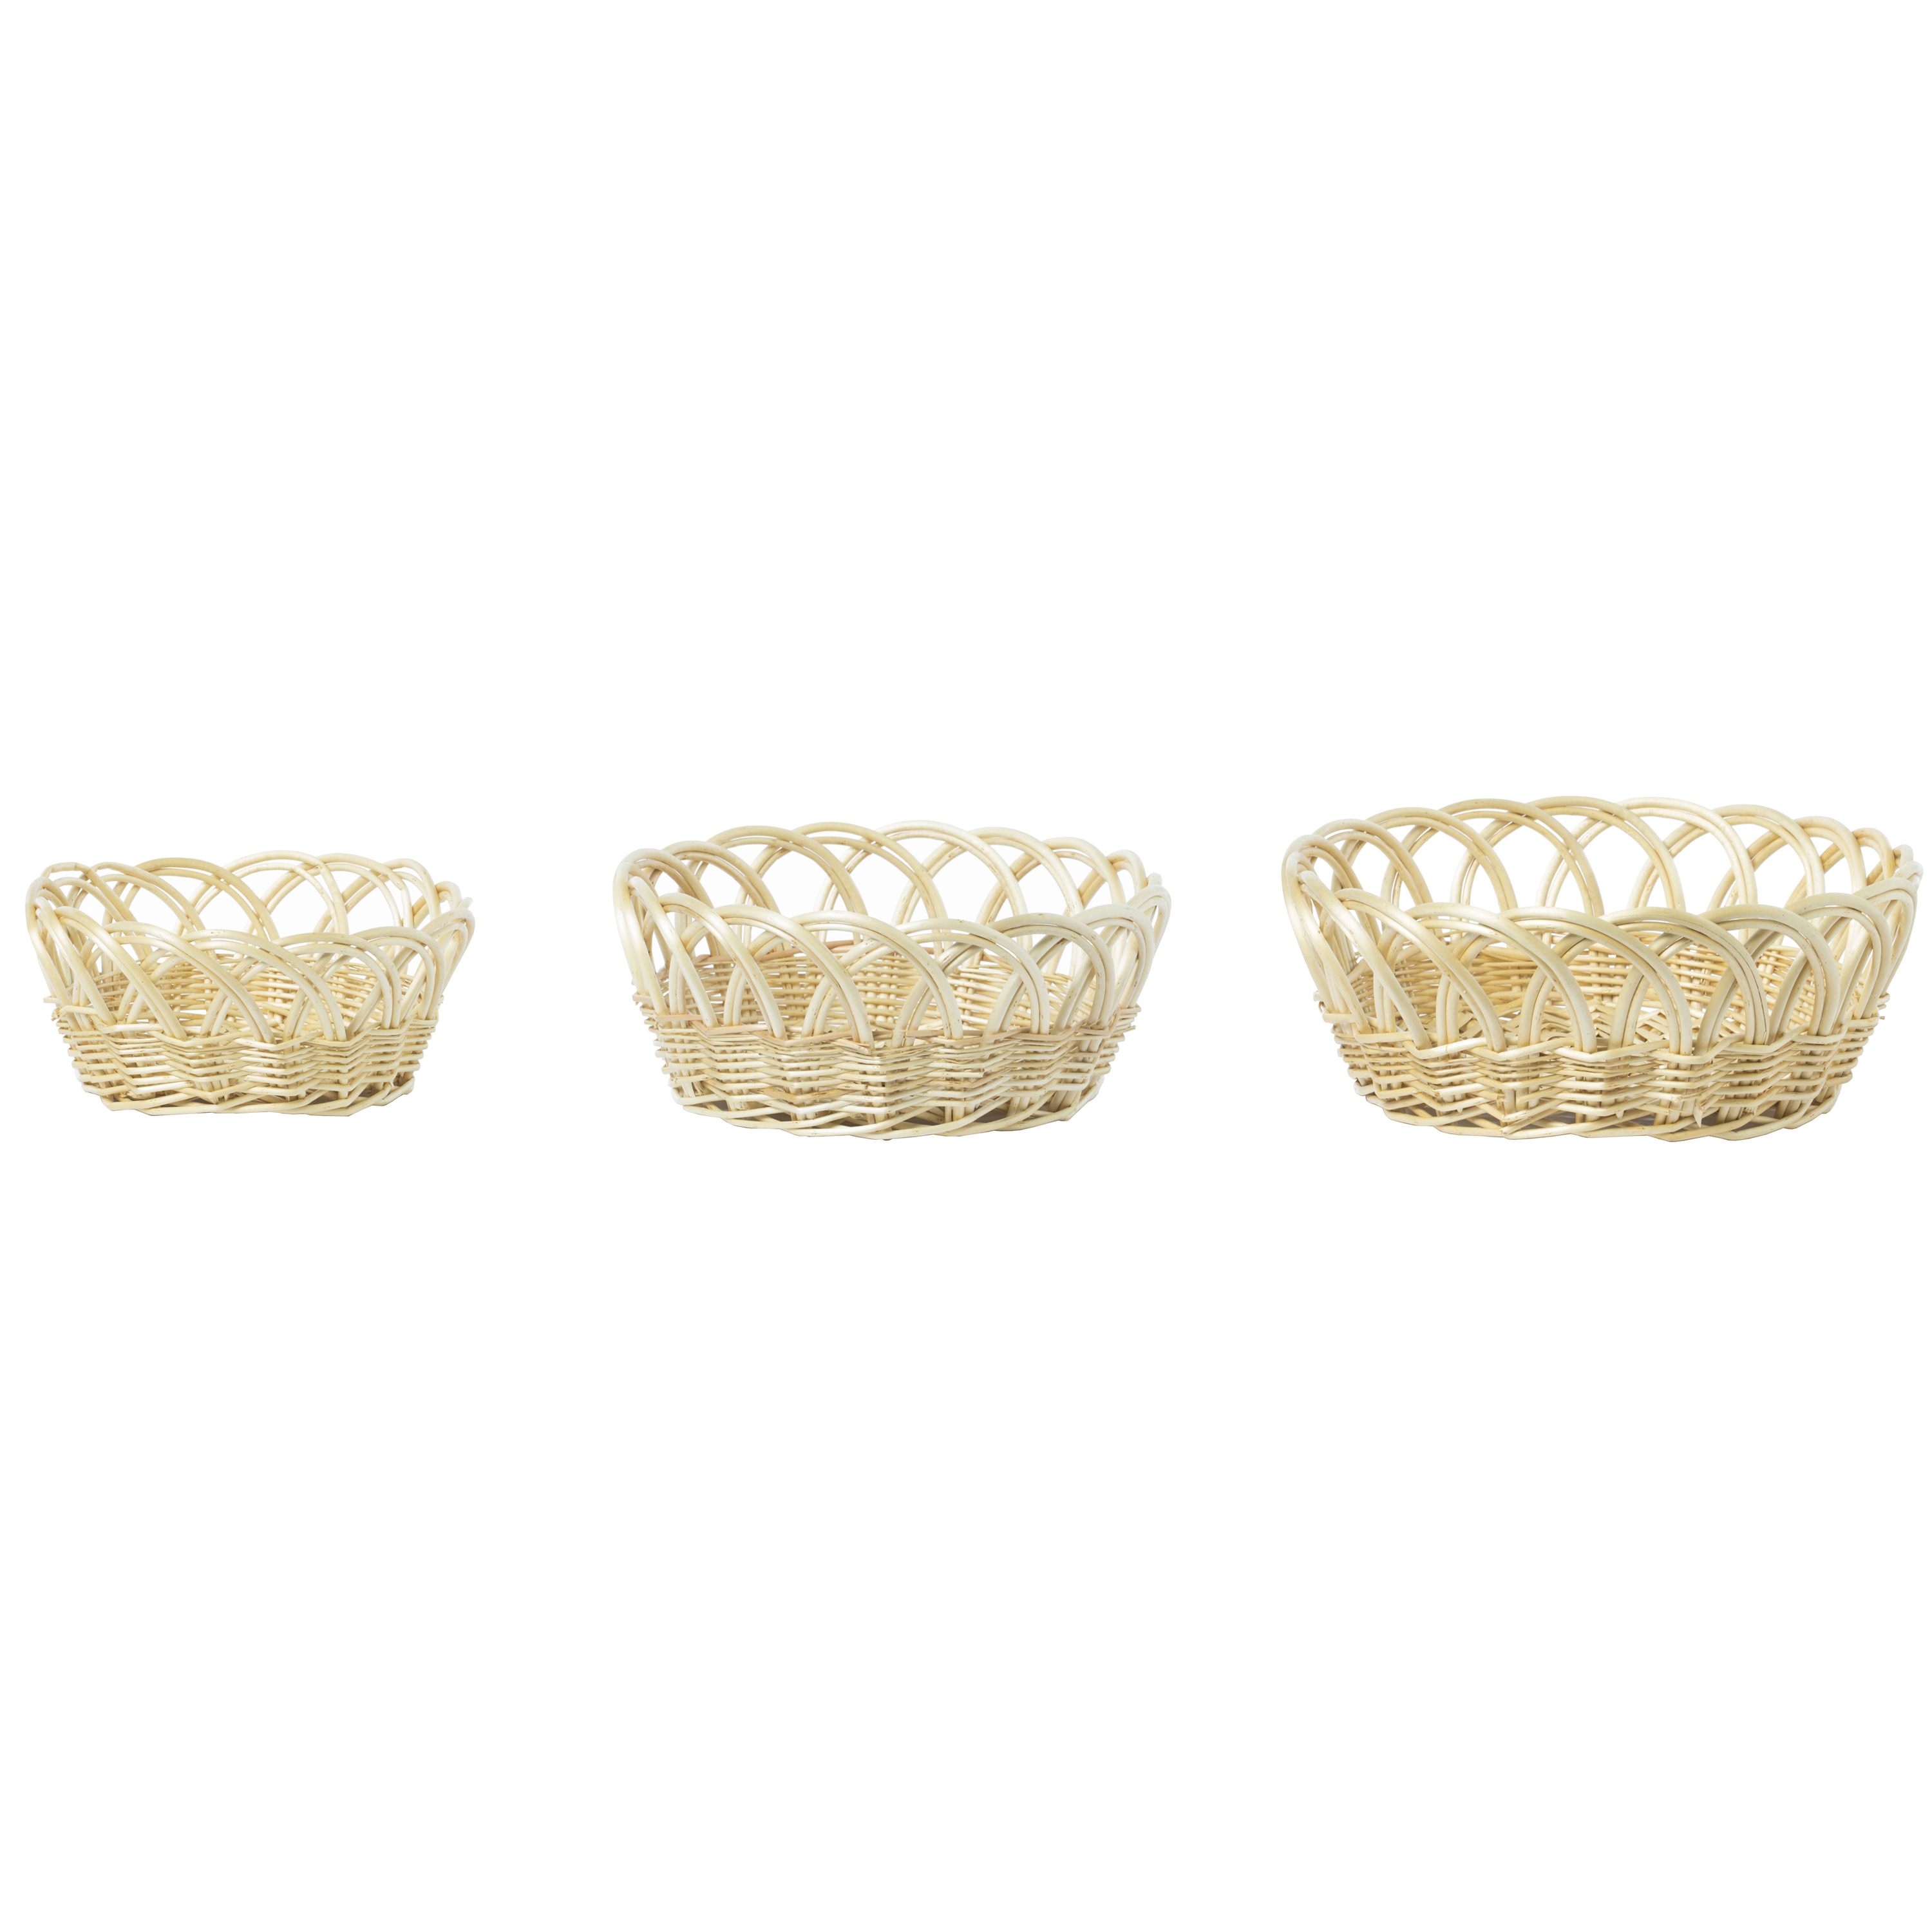 Decorative Round Fruit Bowl Bread Basket Serving Tray - Medium